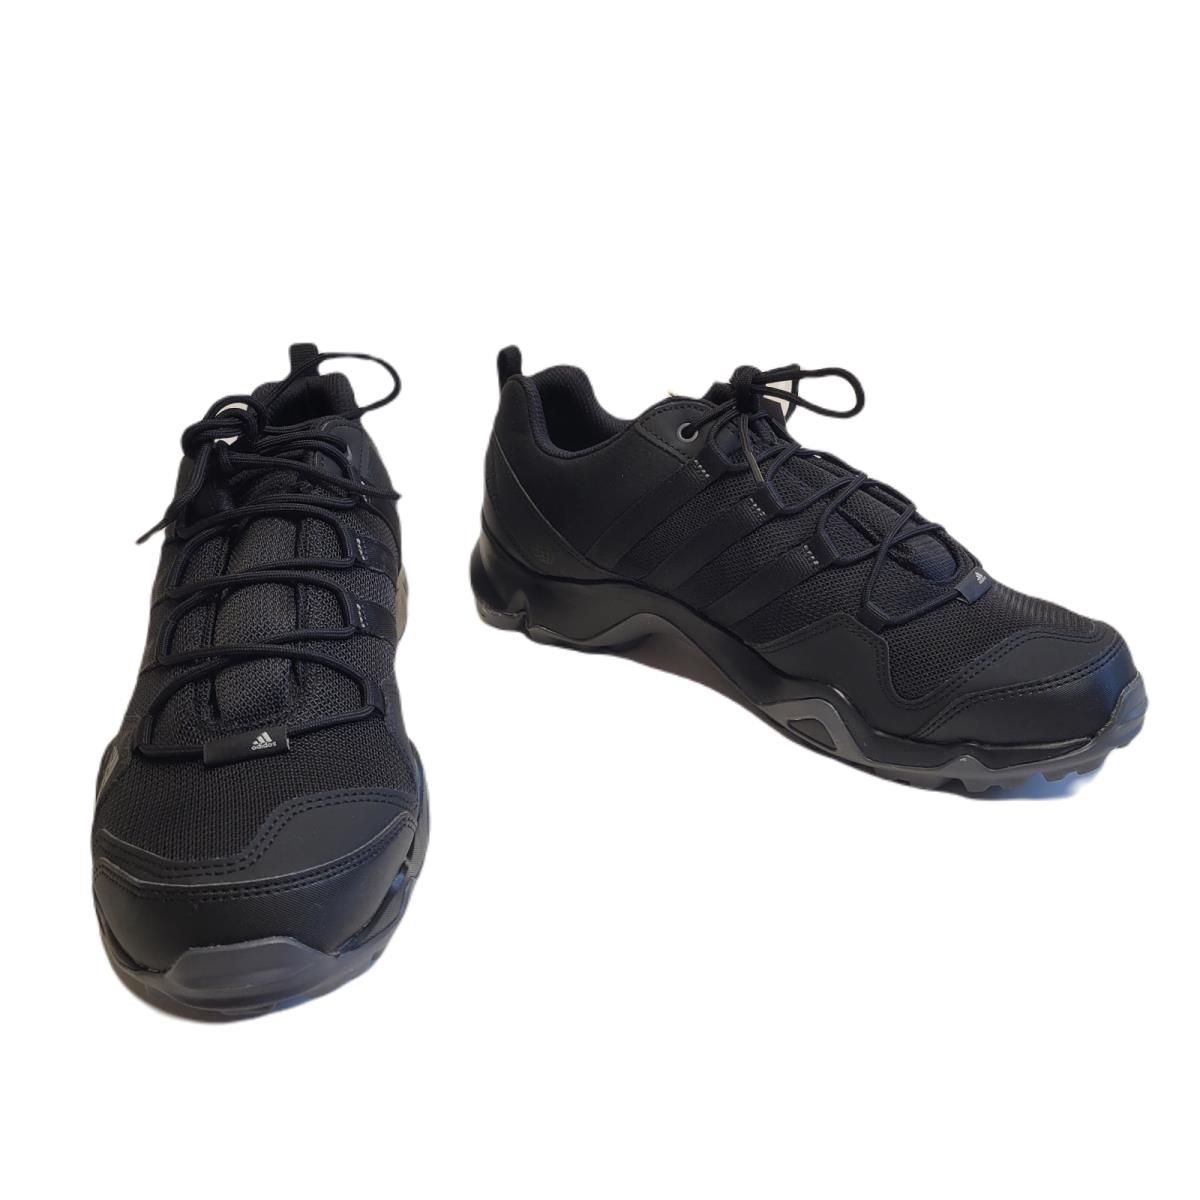 Adidas AX2S Black Hiking Shoe with Black Stripes Men`s Sizes